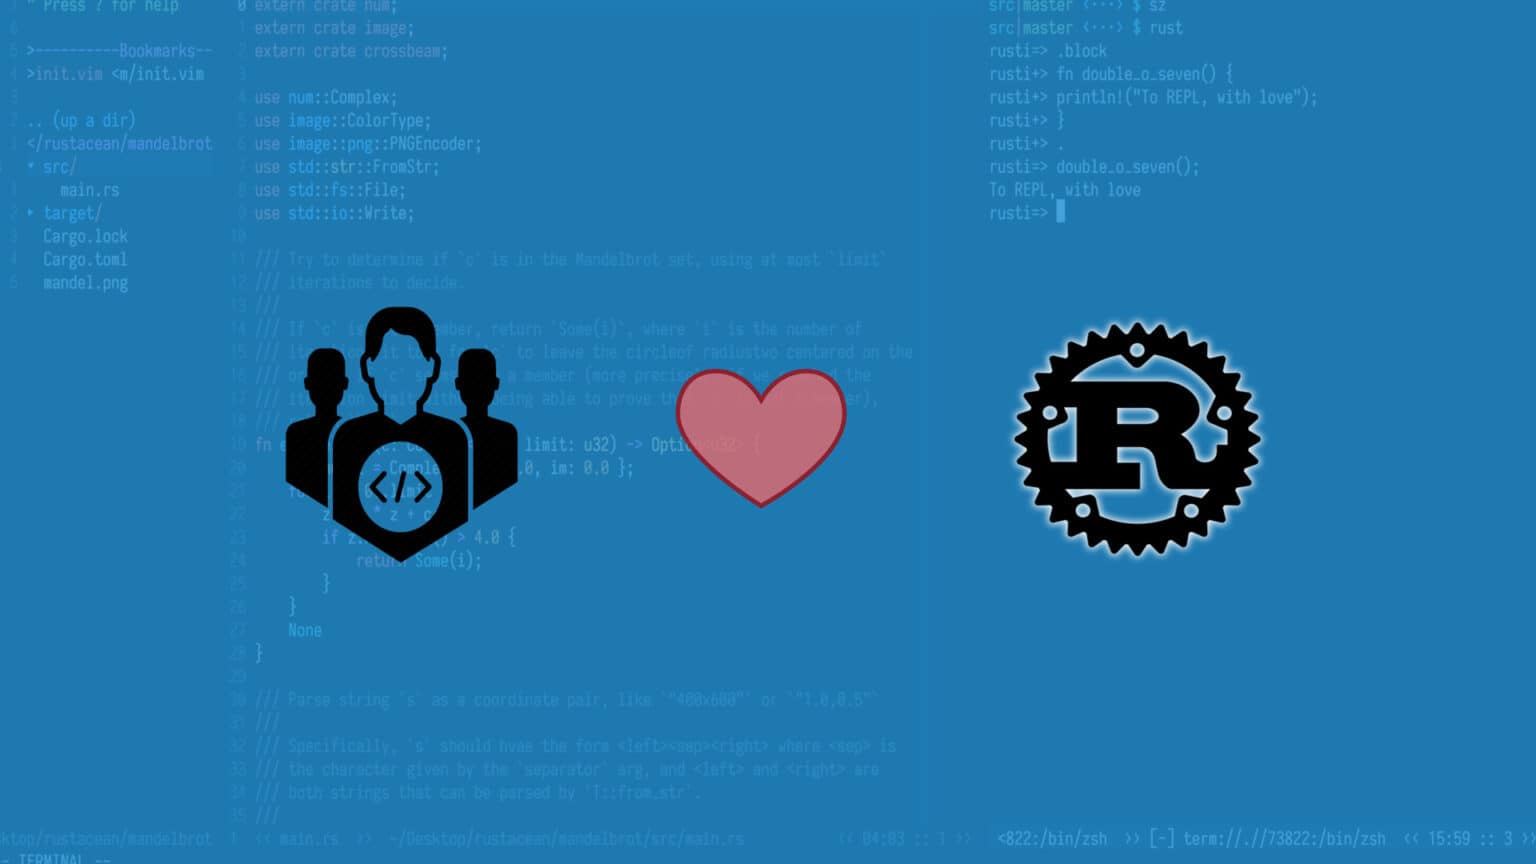 rust programming language developer